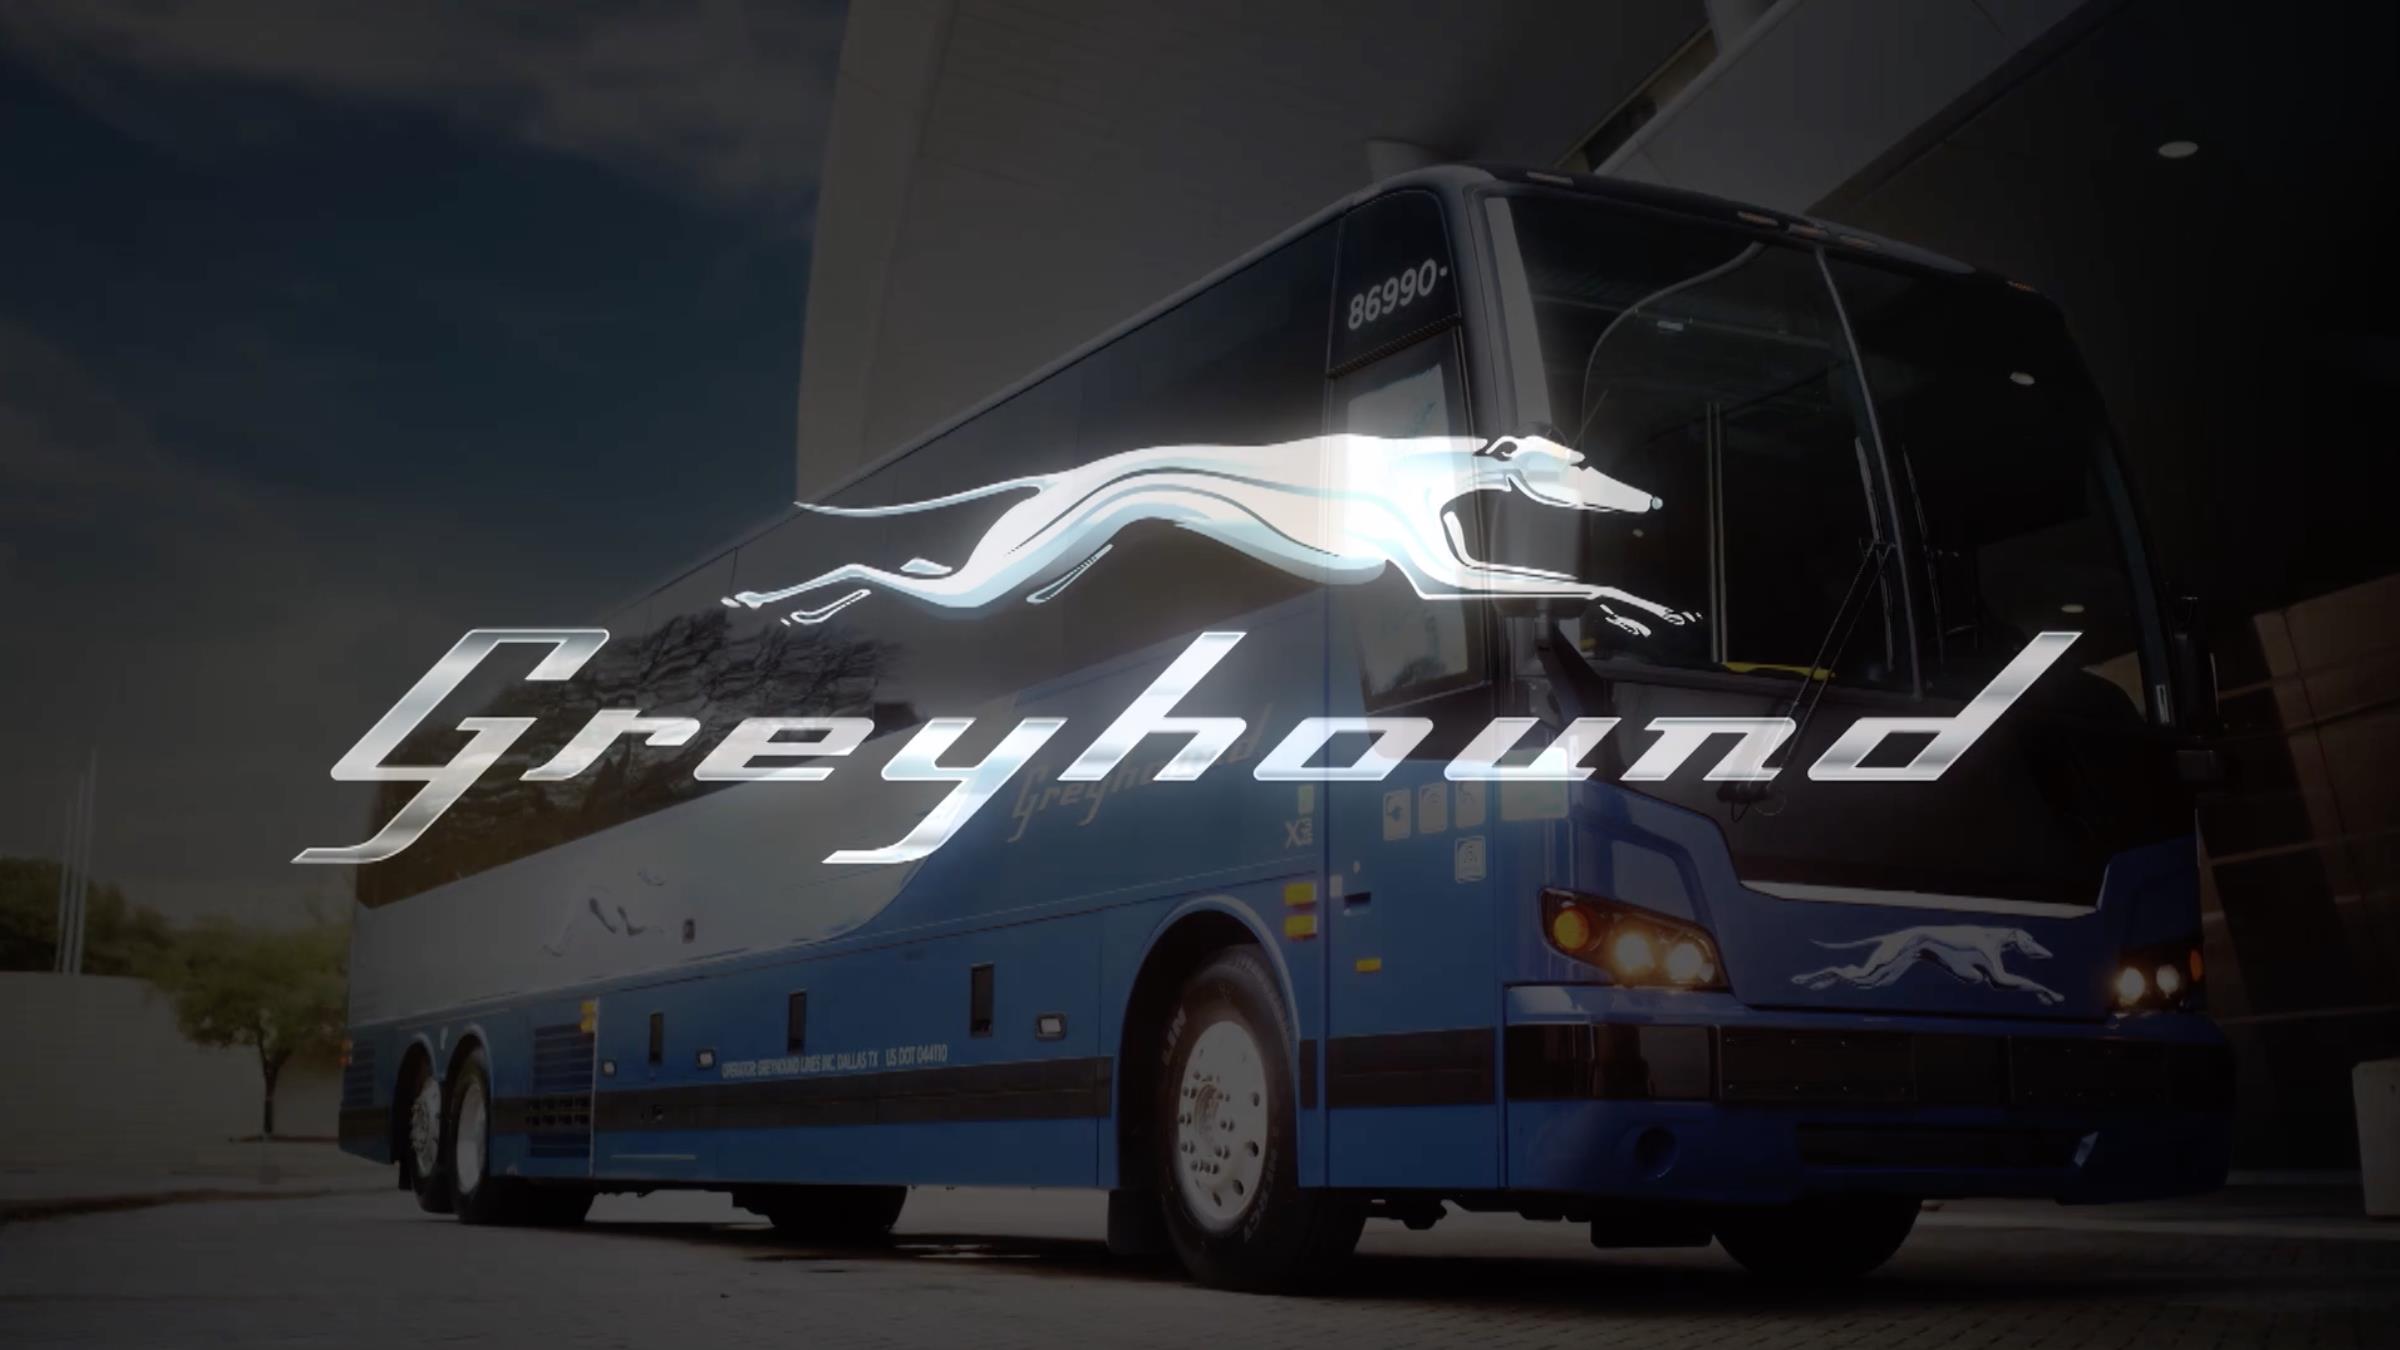 Greyhound 2020 Reel